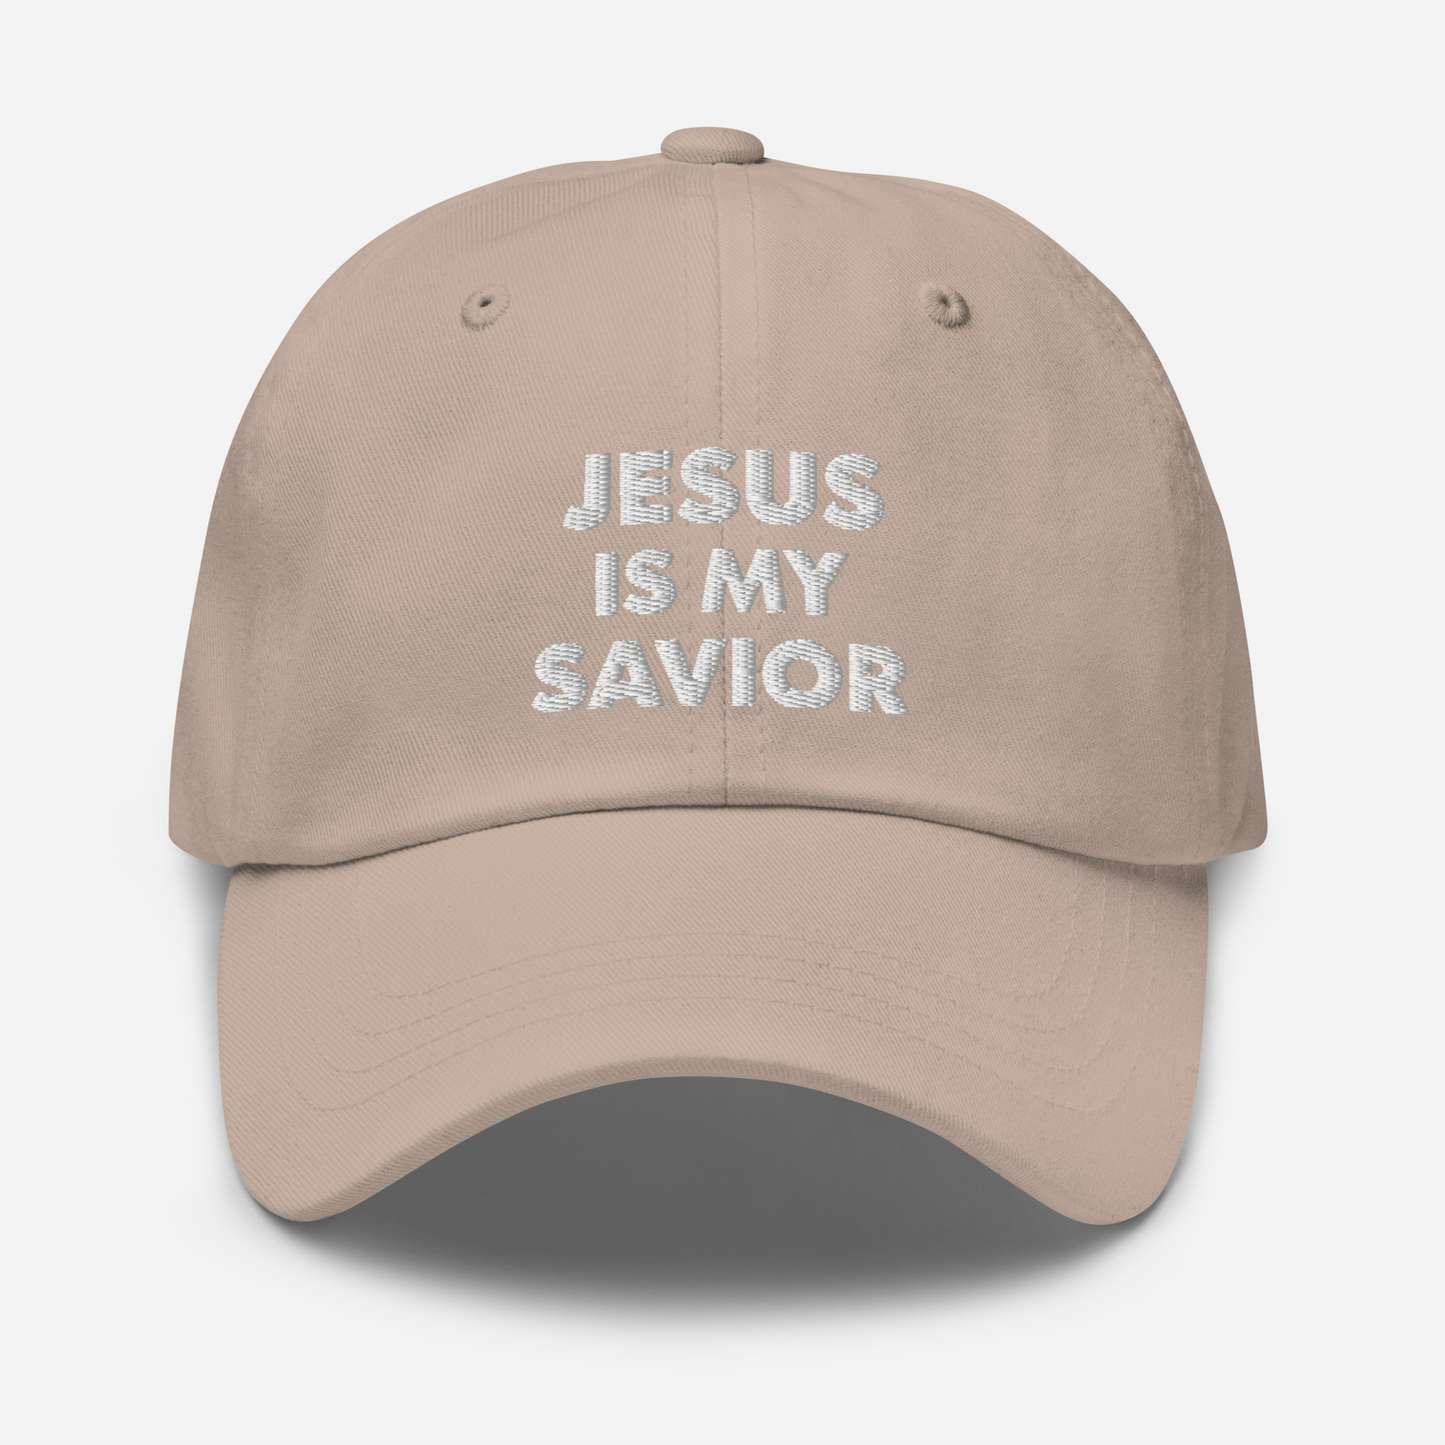 Jesus is my Savior - Dad hat